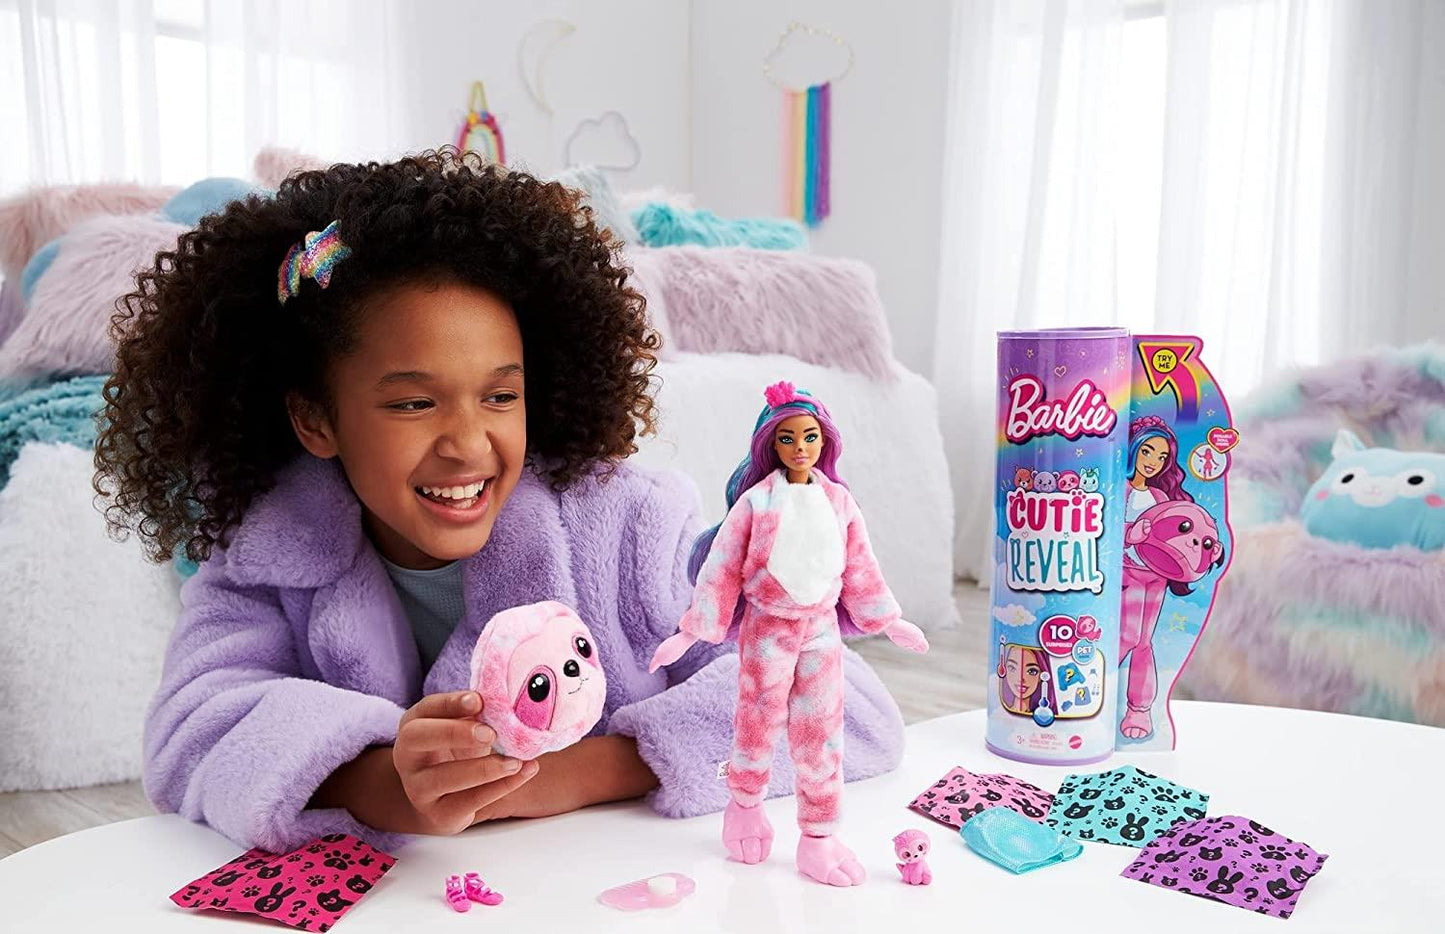 Barbie Cutie Reveal Doll with Sloth Plush by Barbie - UKBuyZone